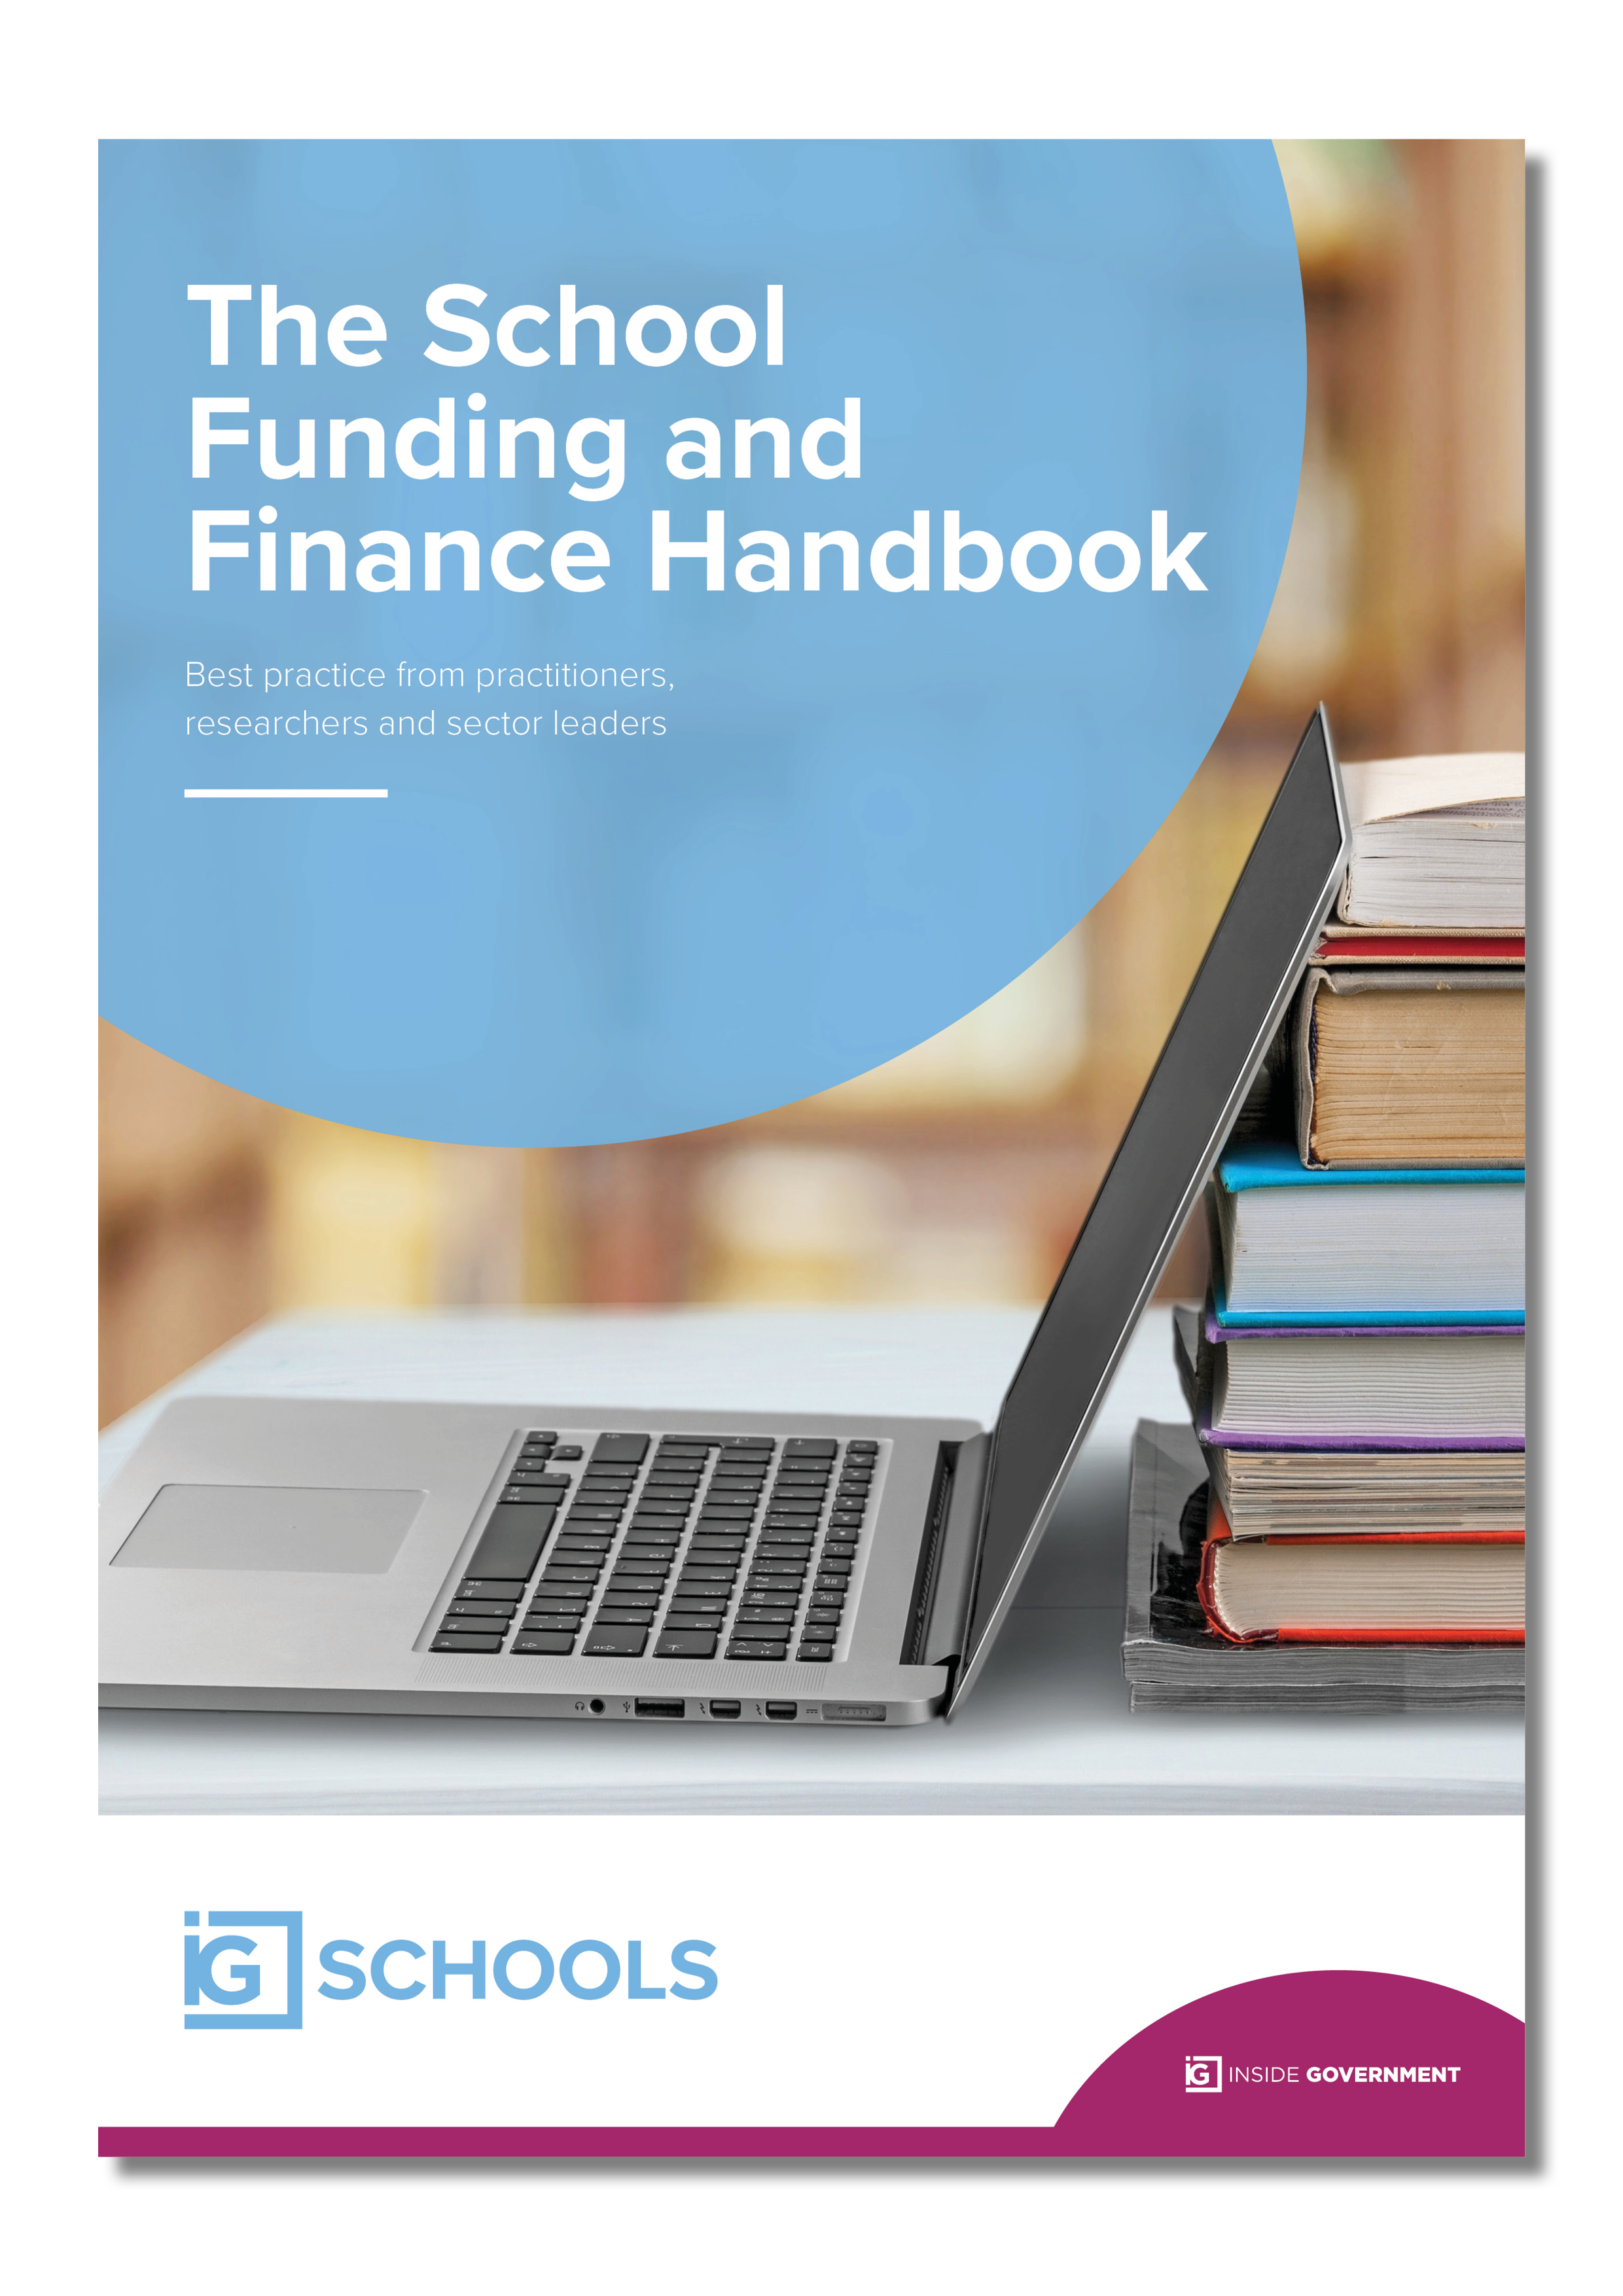 The School Funding and Finance Handbook